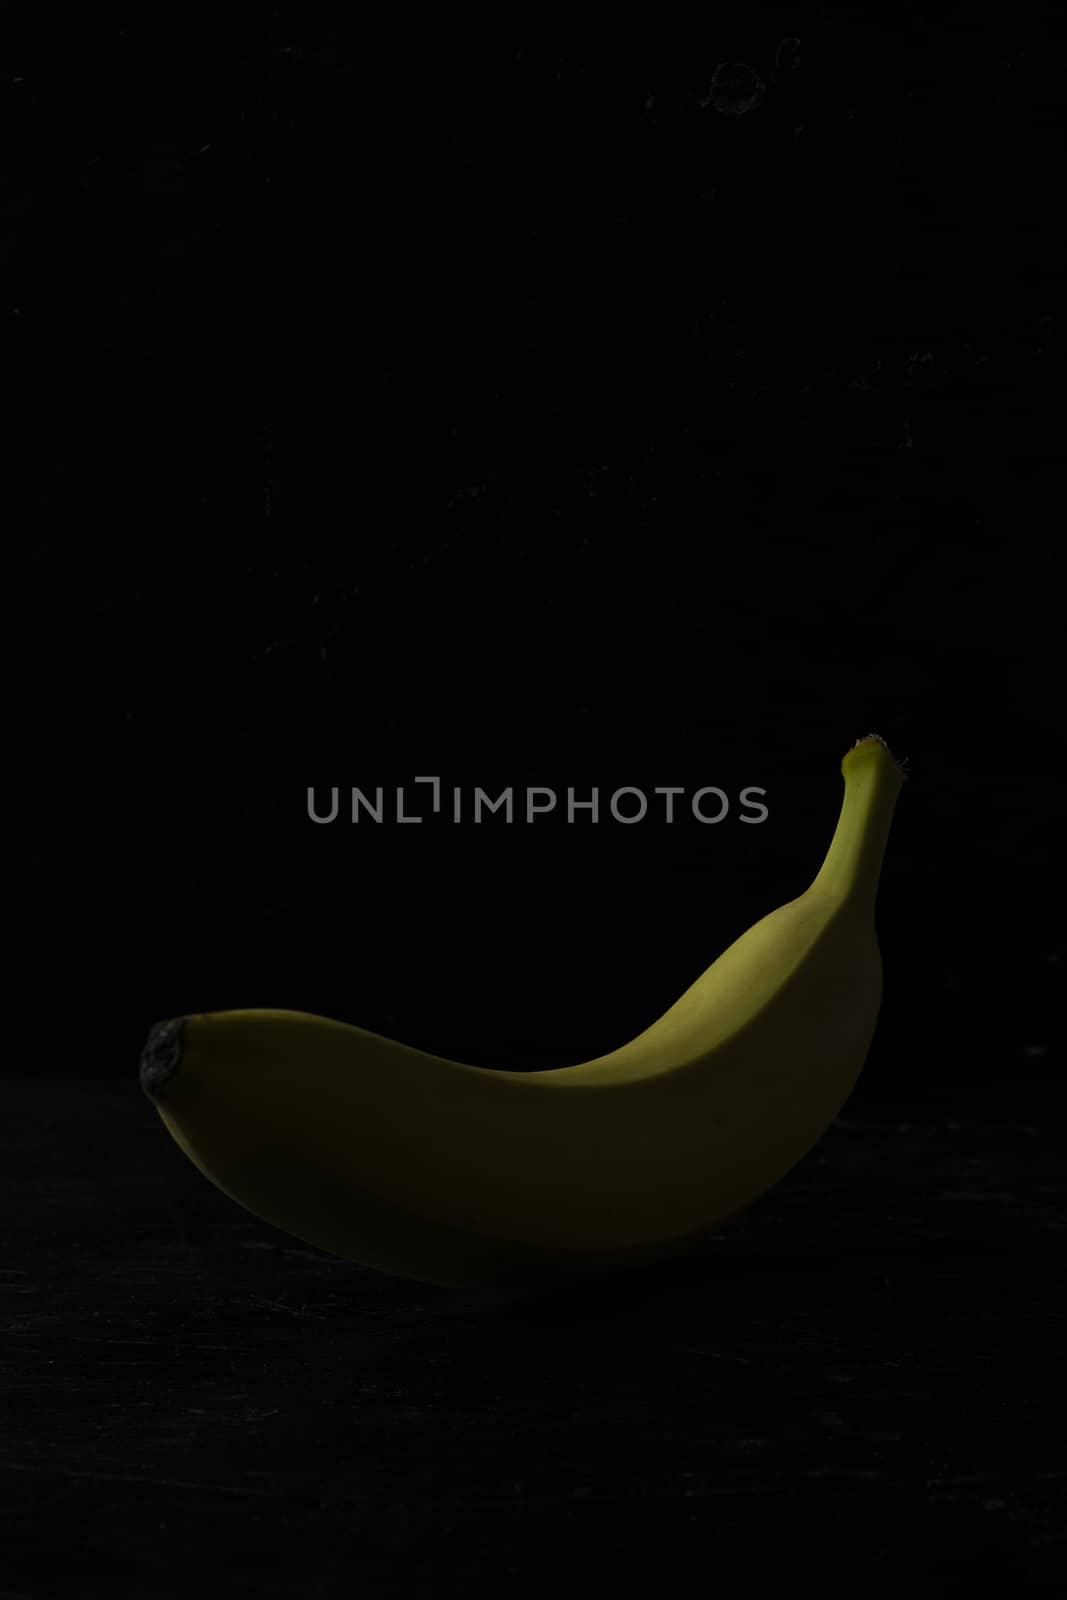 Single yellow banana on black wooden background.